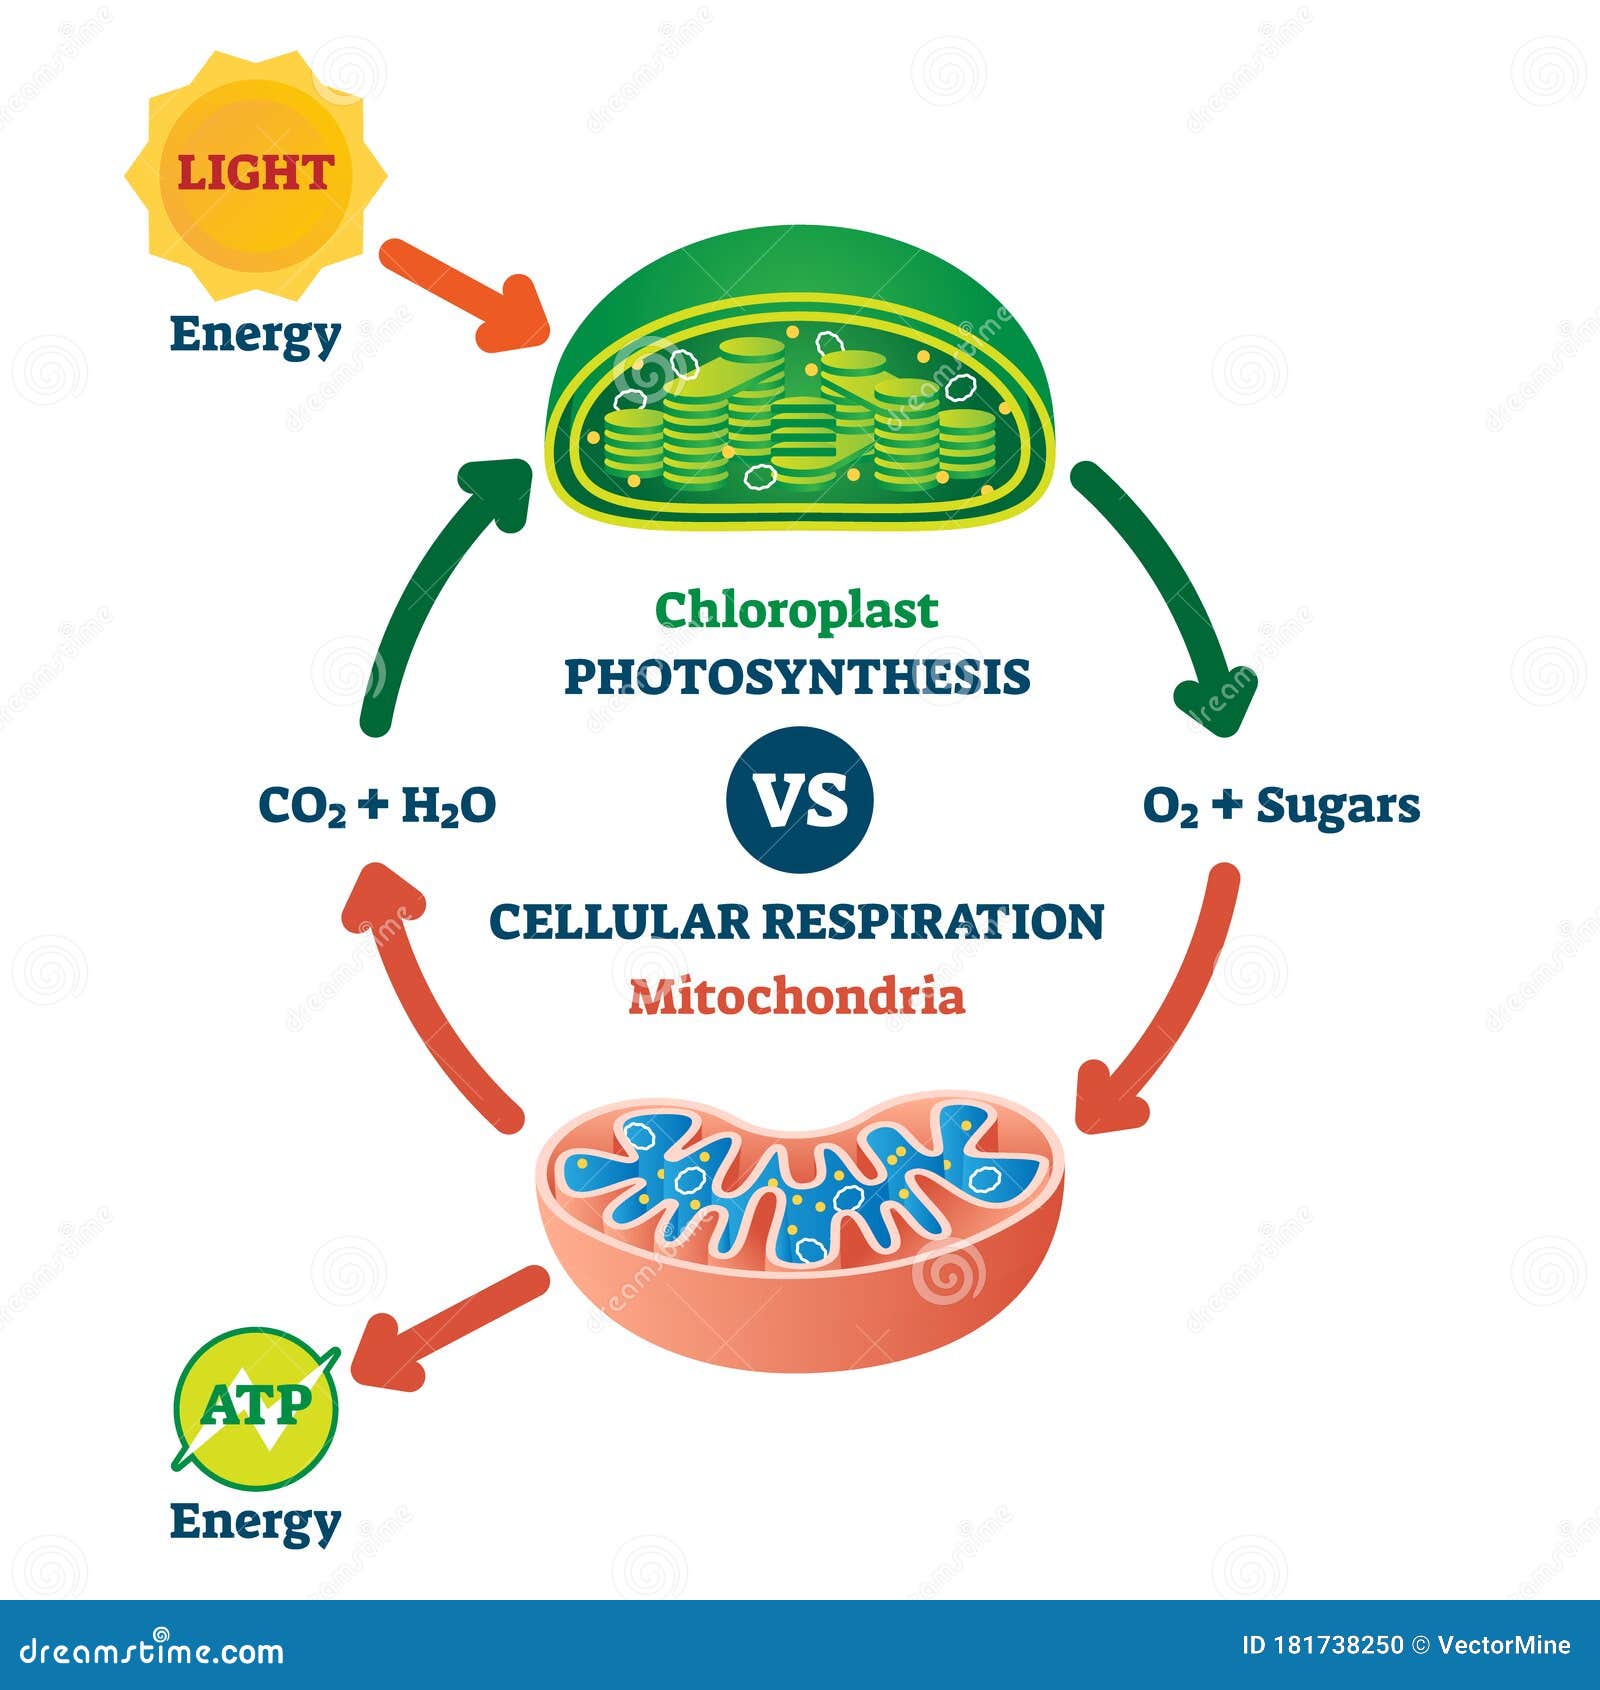 chloroplast vs mitochondria process educational scheme  .